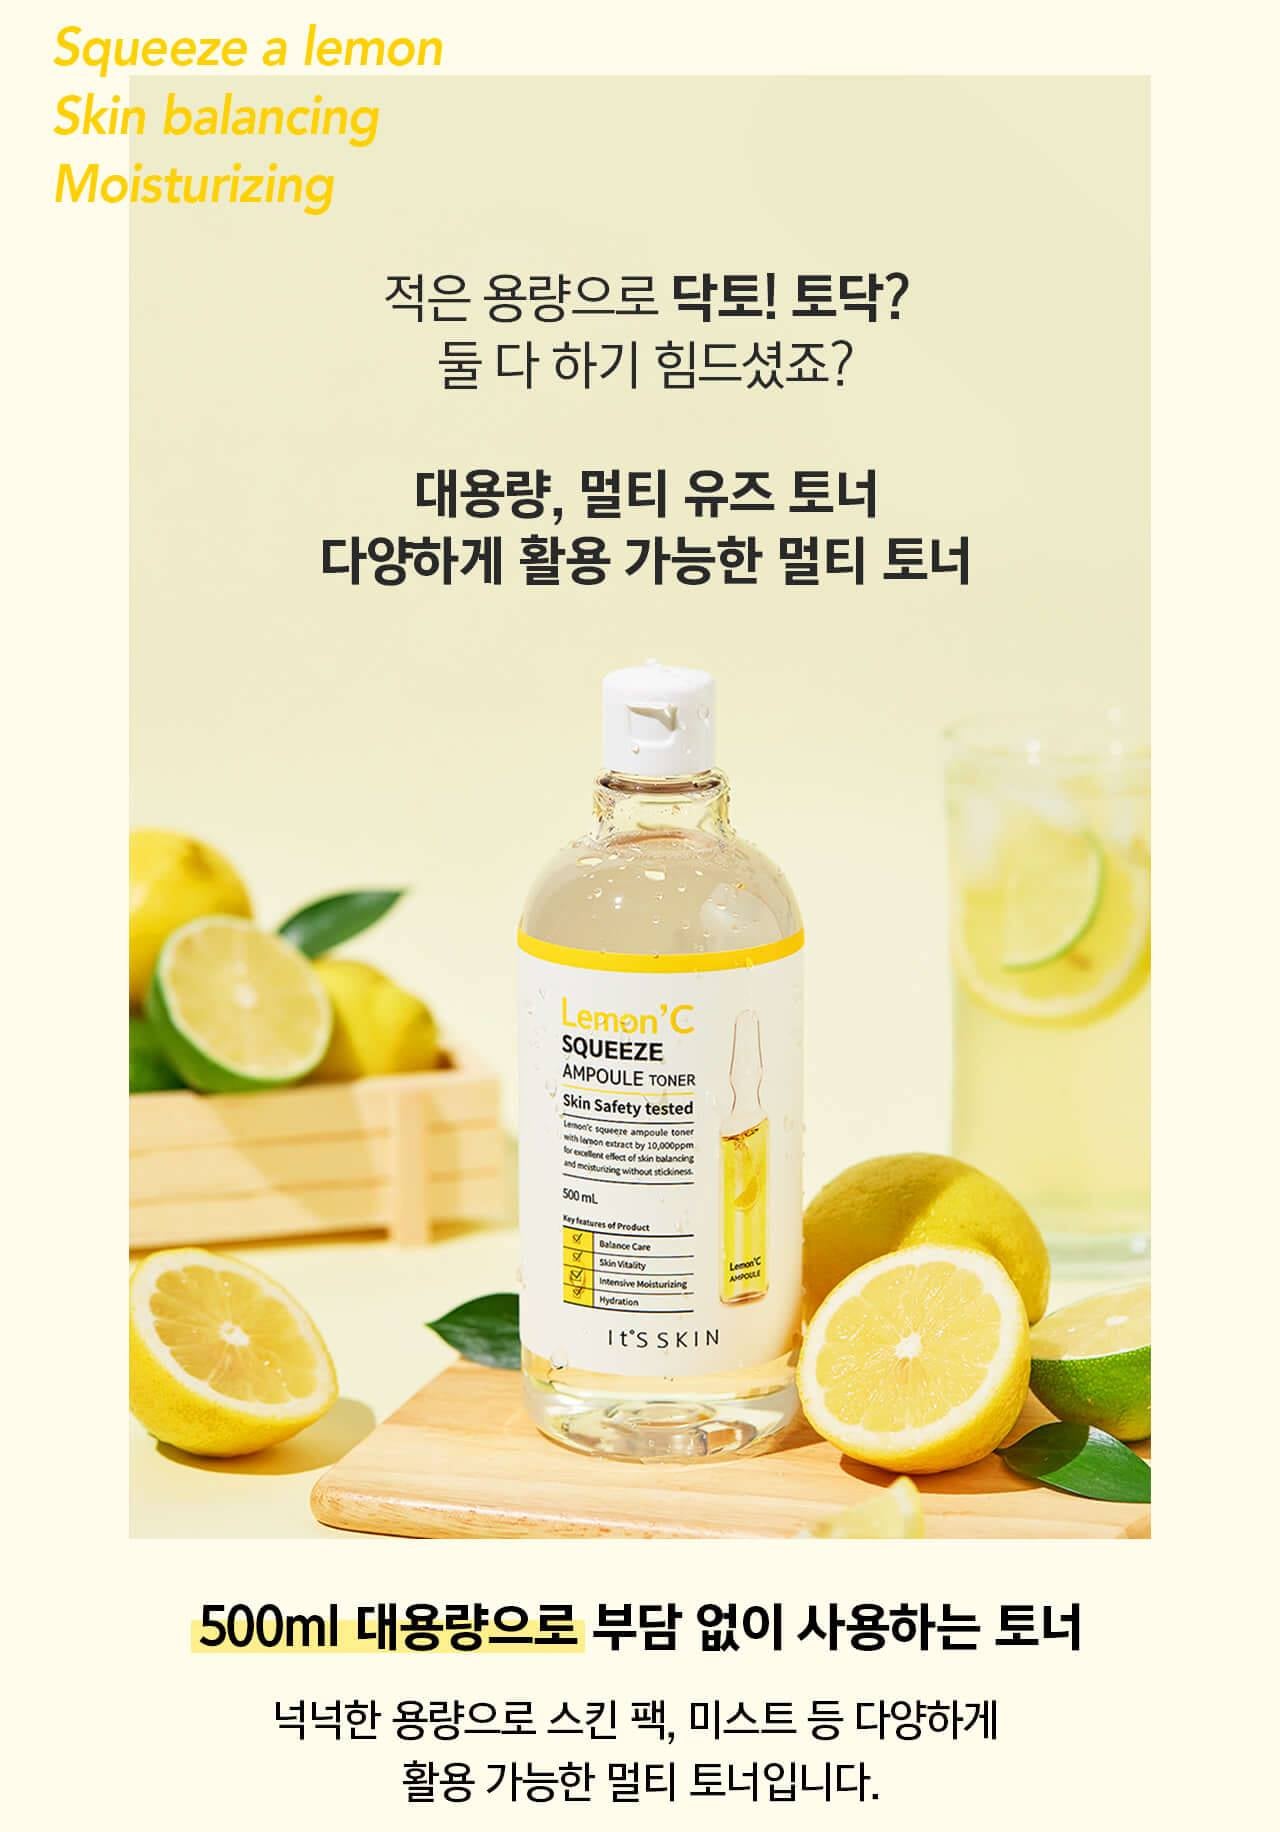 It's Skin Lemon'C Squeeze Ampoule Toner 500ml hyaluronic acid moisture